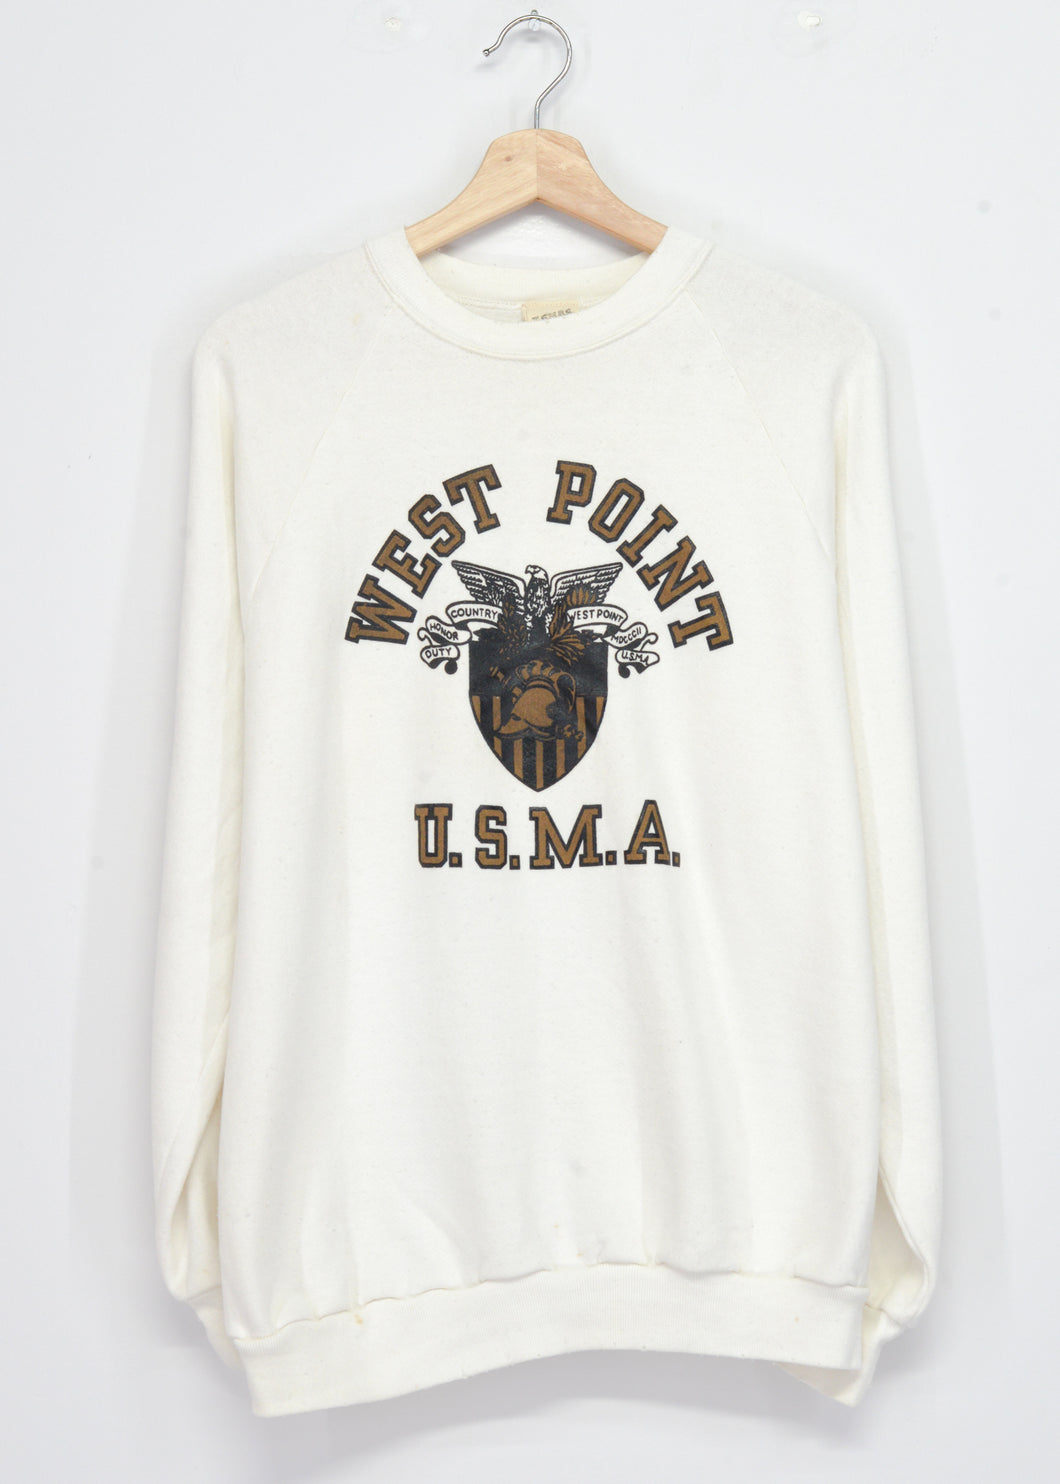 West Point U.S.M.A Sweatshirt -M/L